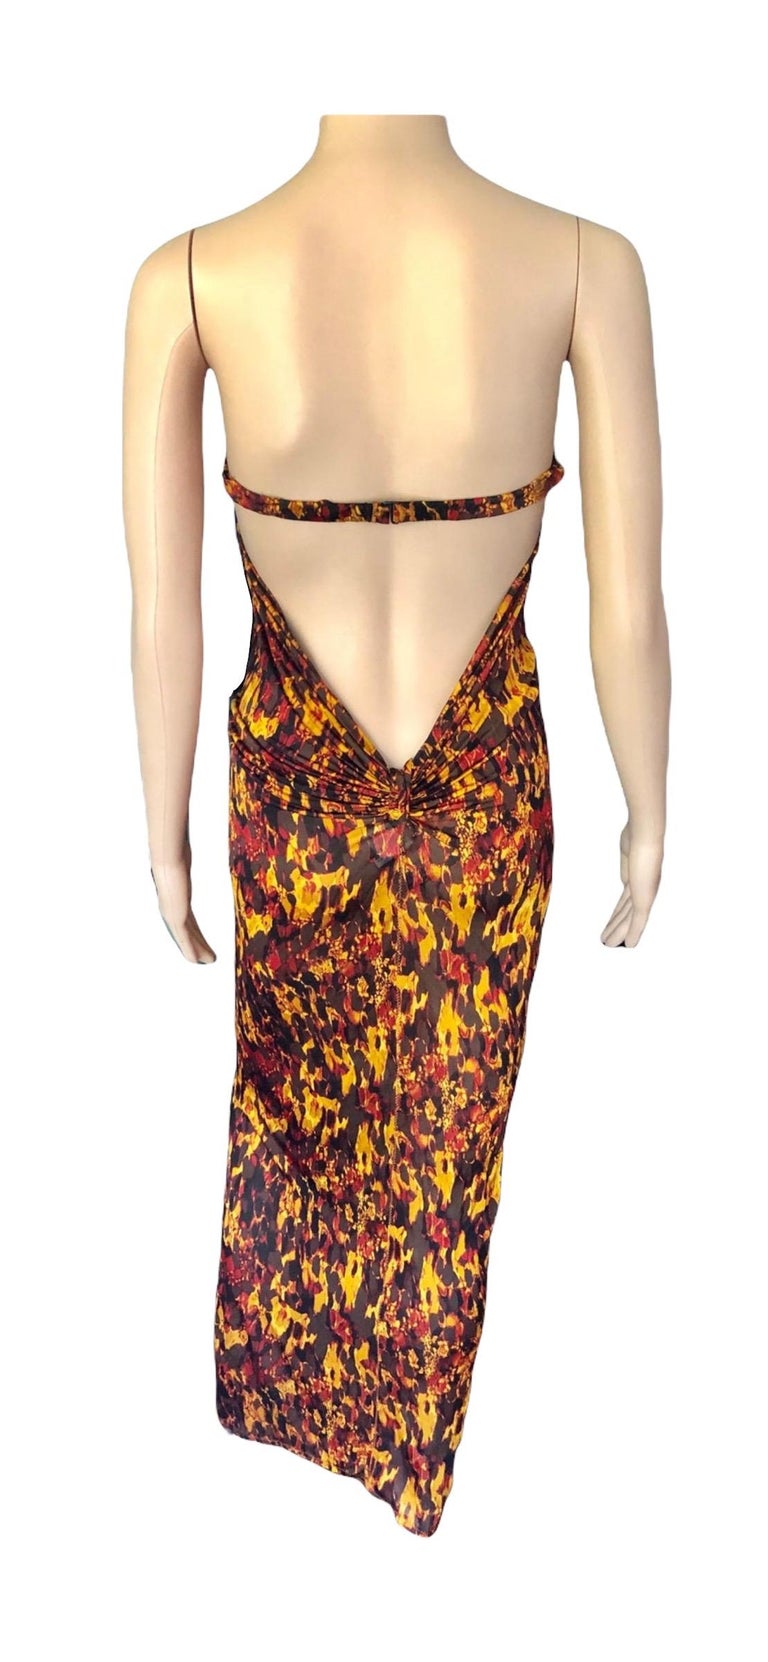 Jean Paul Gaultier S/S 1997 Vintage Embellished Open Back Maxi Evening Dress For Sale 5